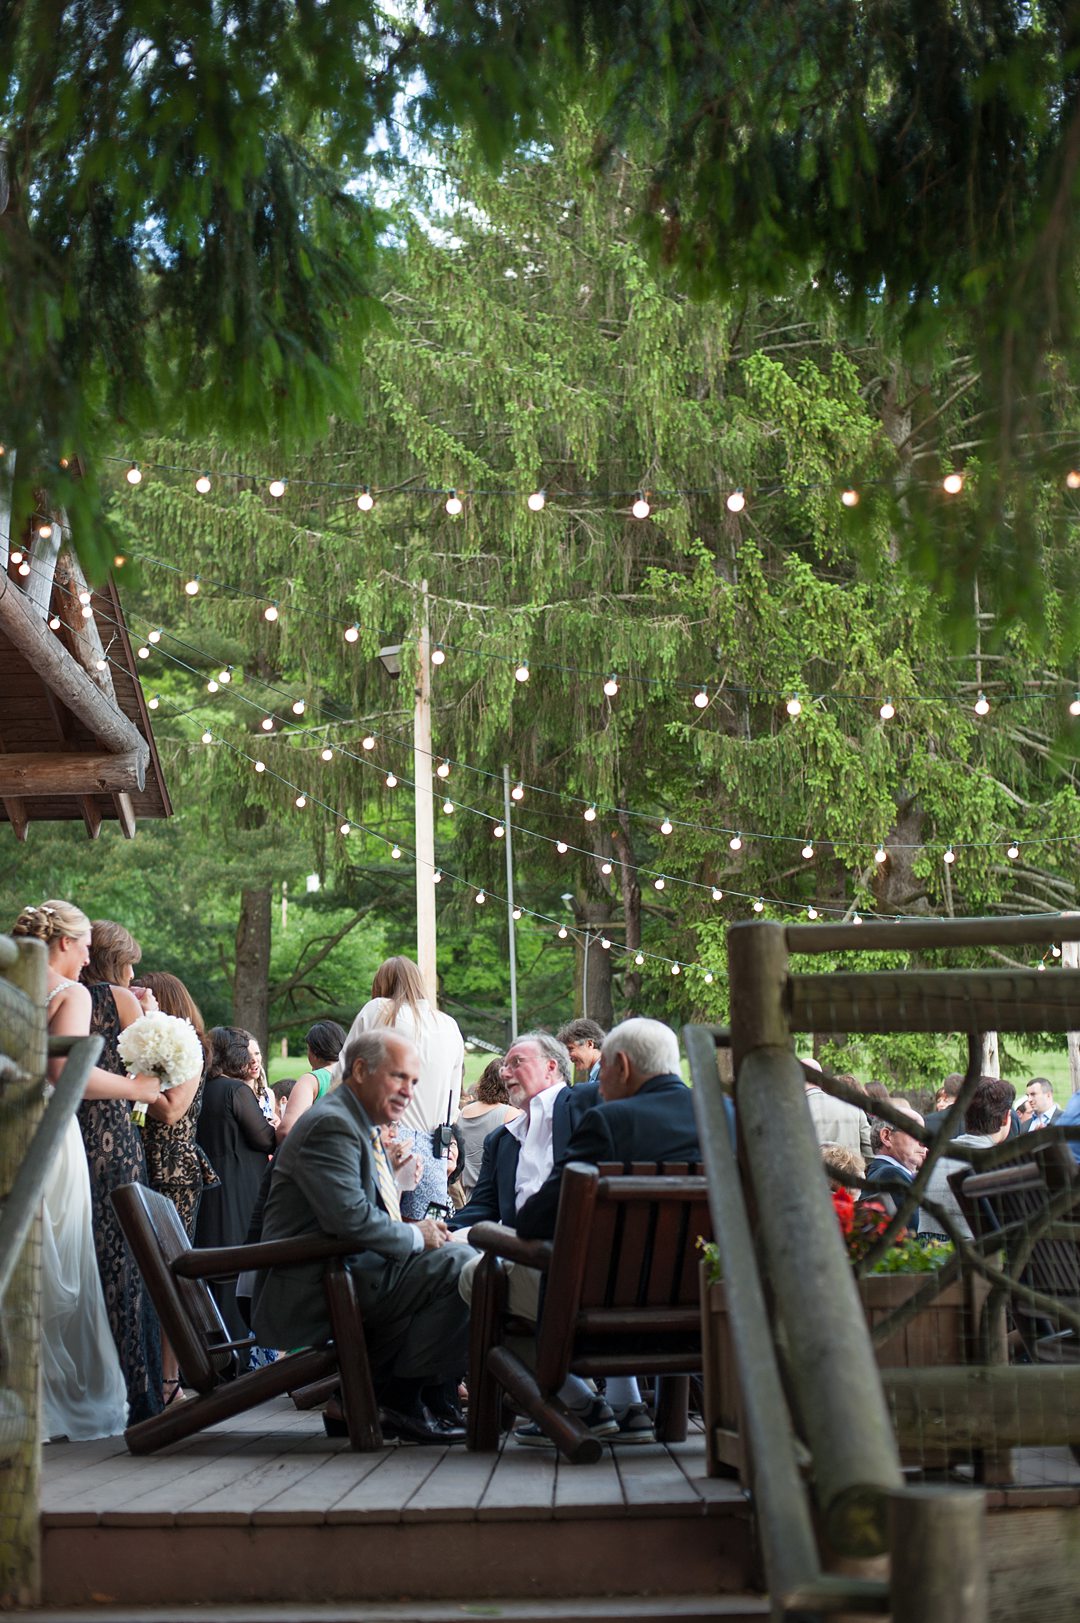 Photos by Mikkel Paige at Club Getaway, a summer camp destination wedding venue.